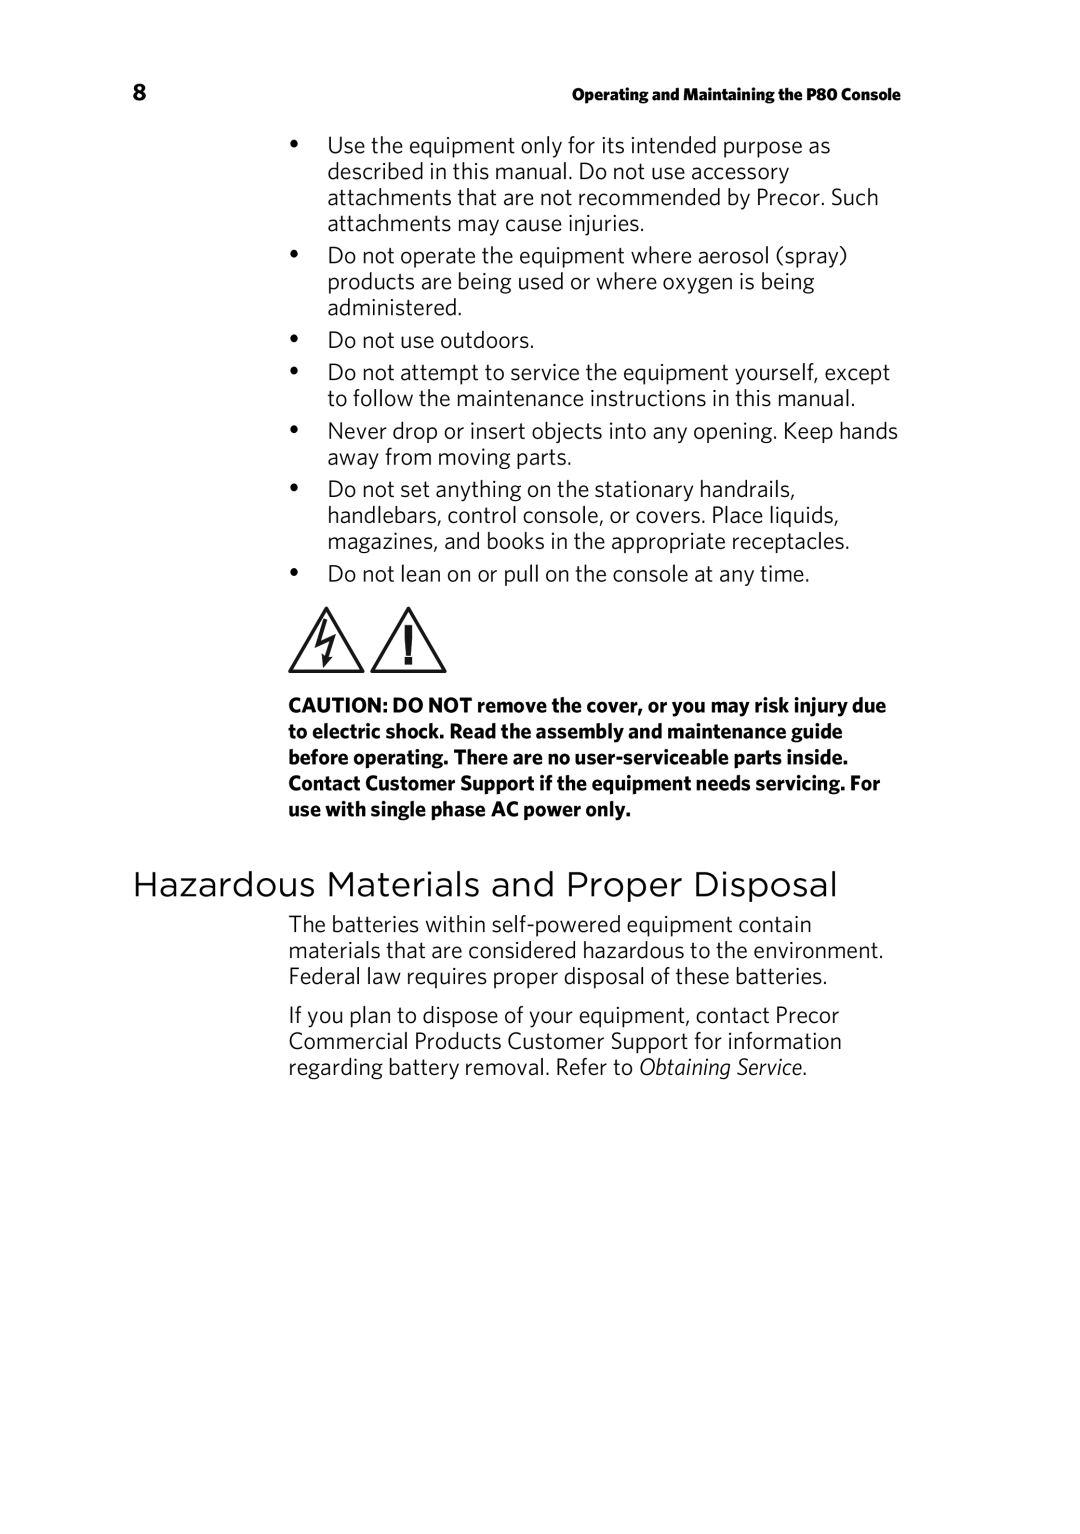 Precor P80 manual Hazardous Materials and Proper Disposal 